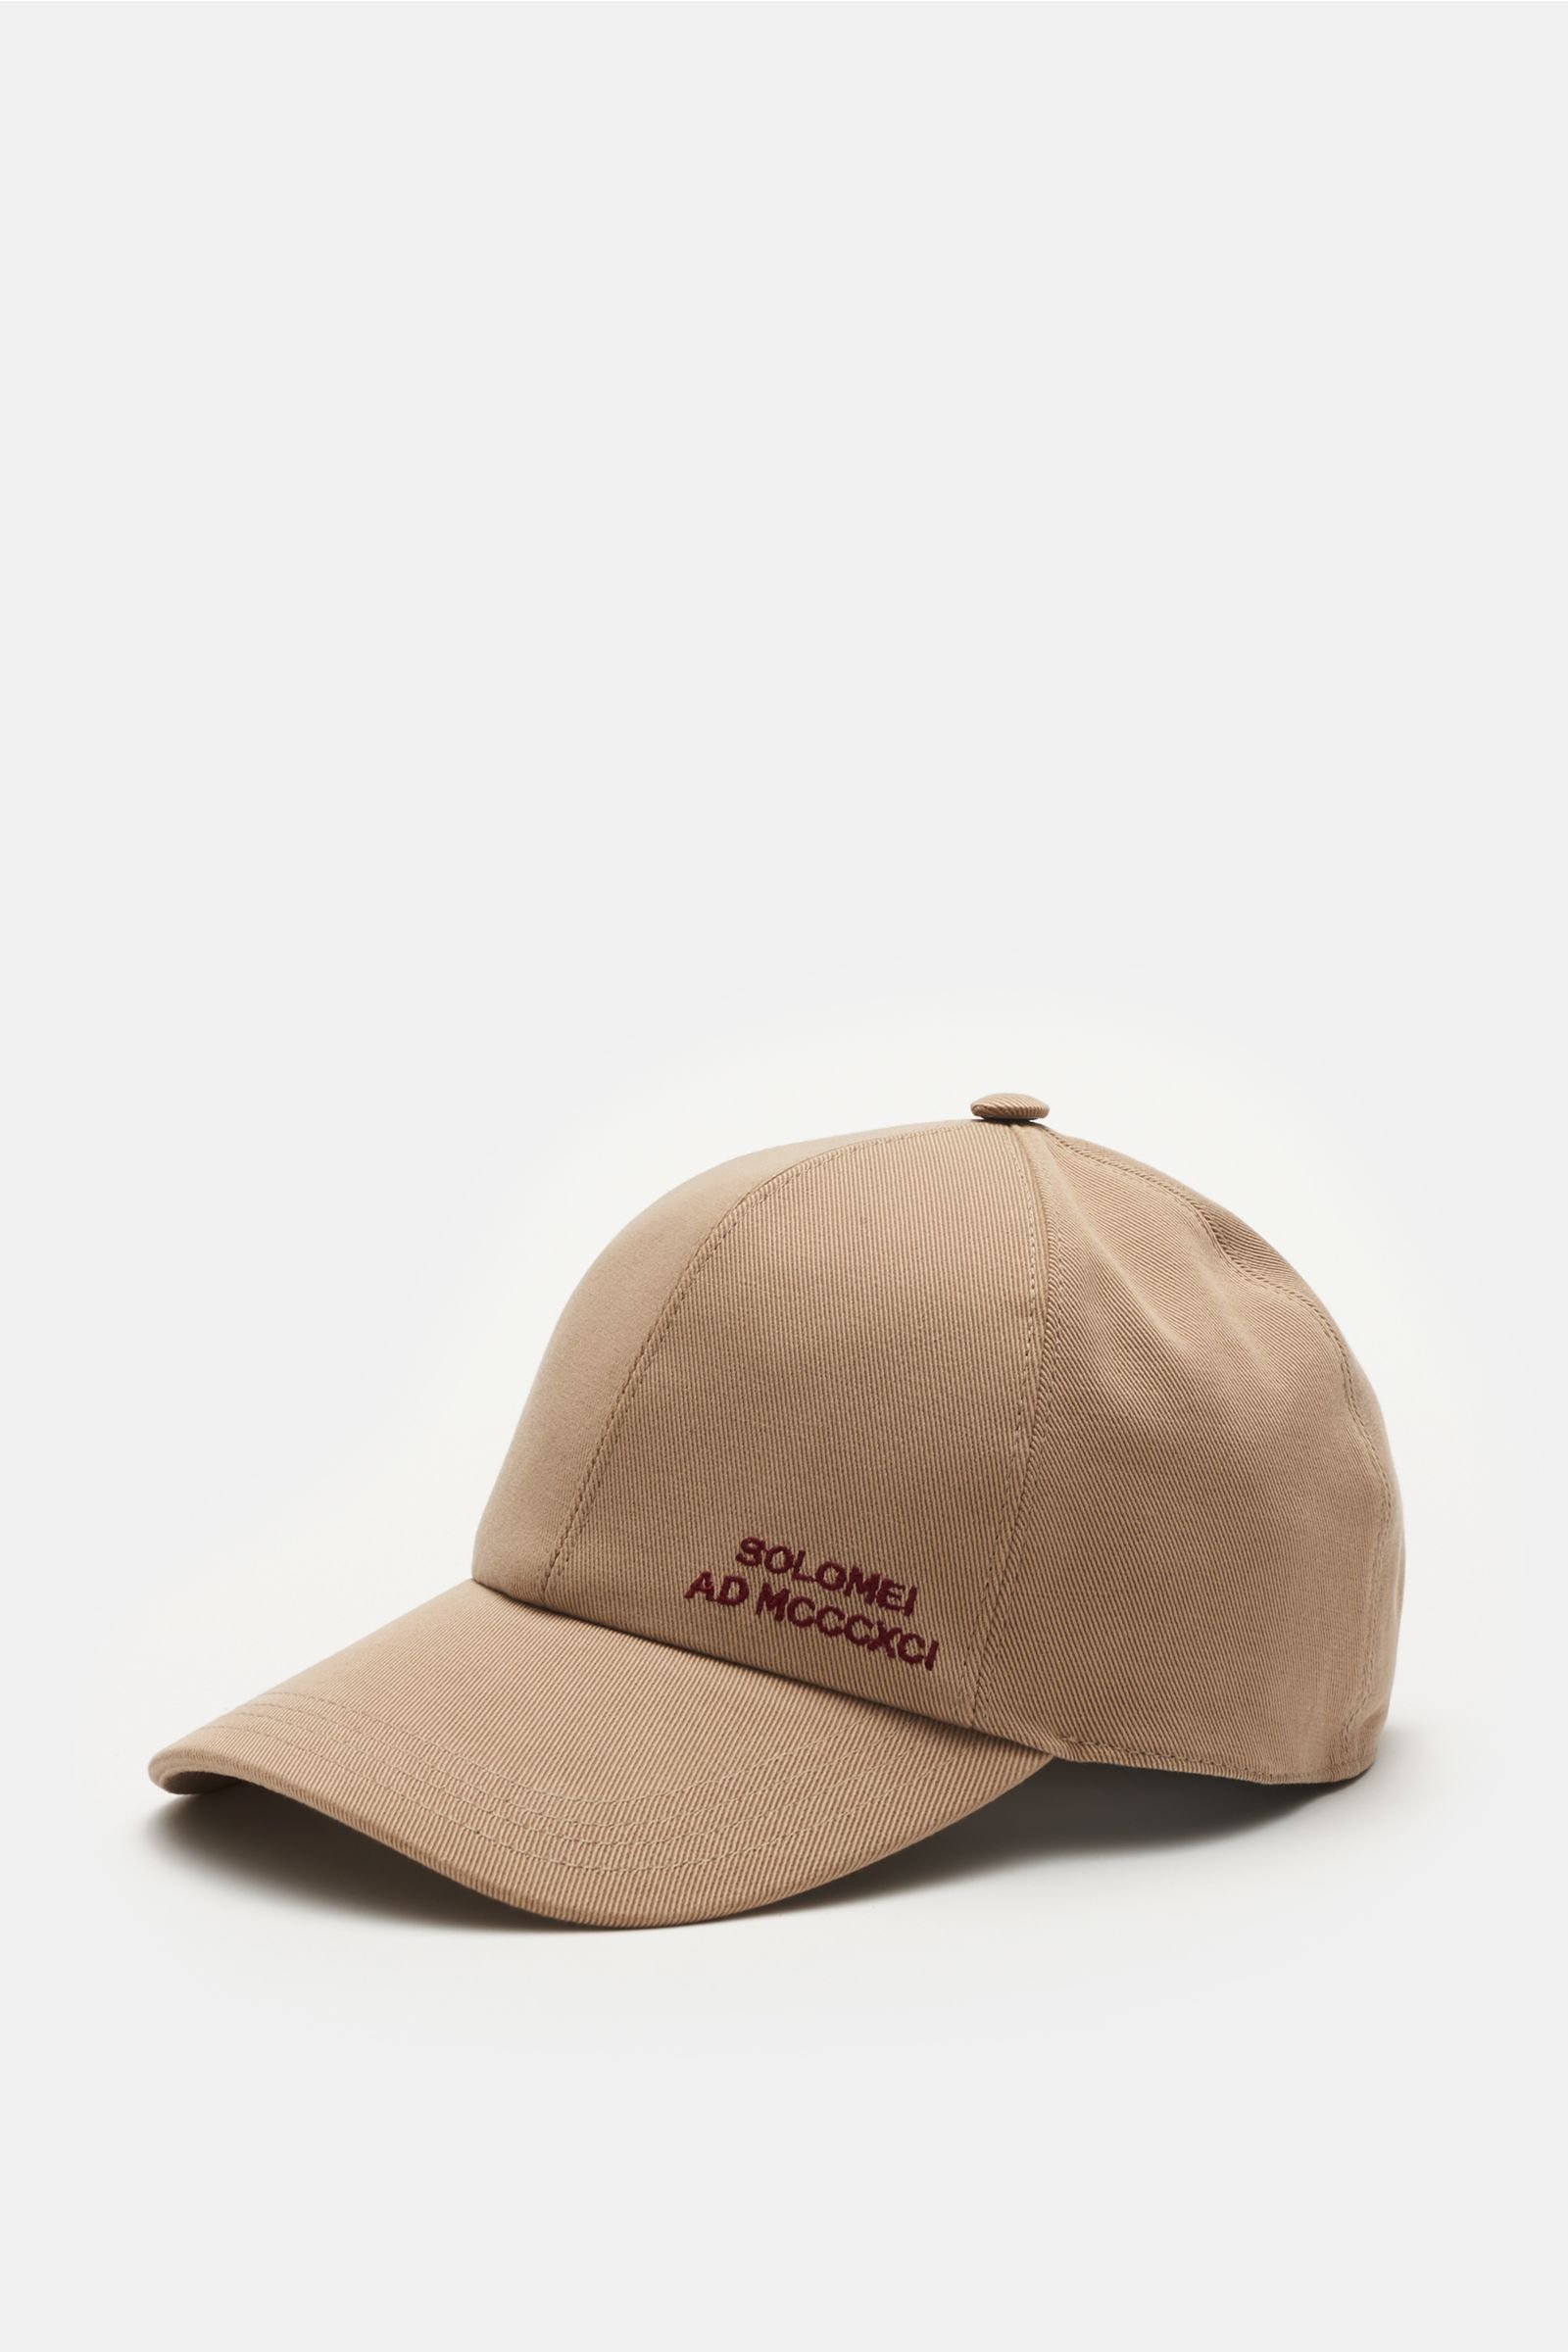 BRUNELLO CUCINELLI baseball cap light brown | BRAUN Hamburg